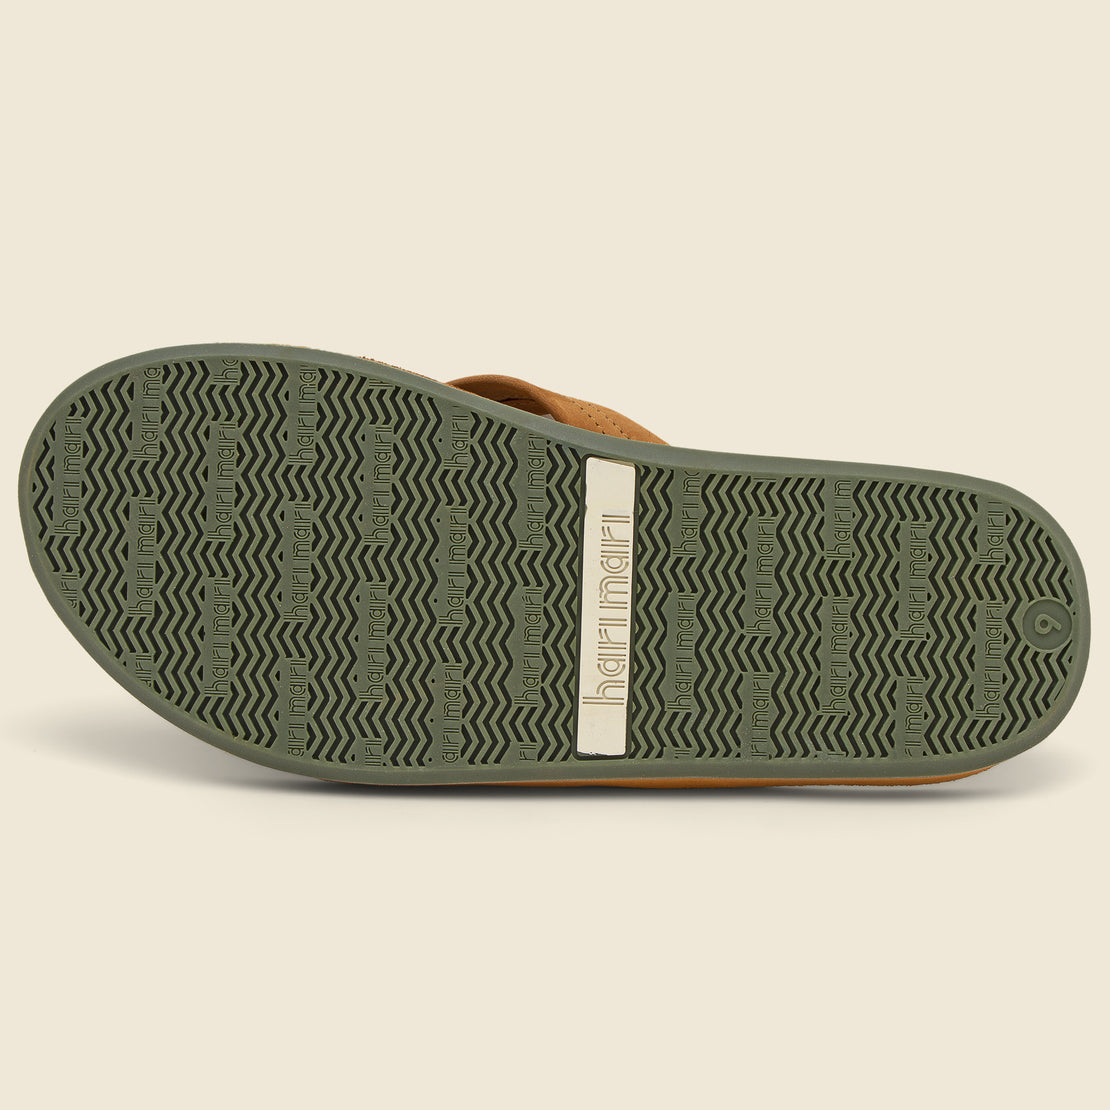 Fields Flip Flop - Tan/Olive - Hari Mari - STAG Provisions - Shoes - Sandals / Flops